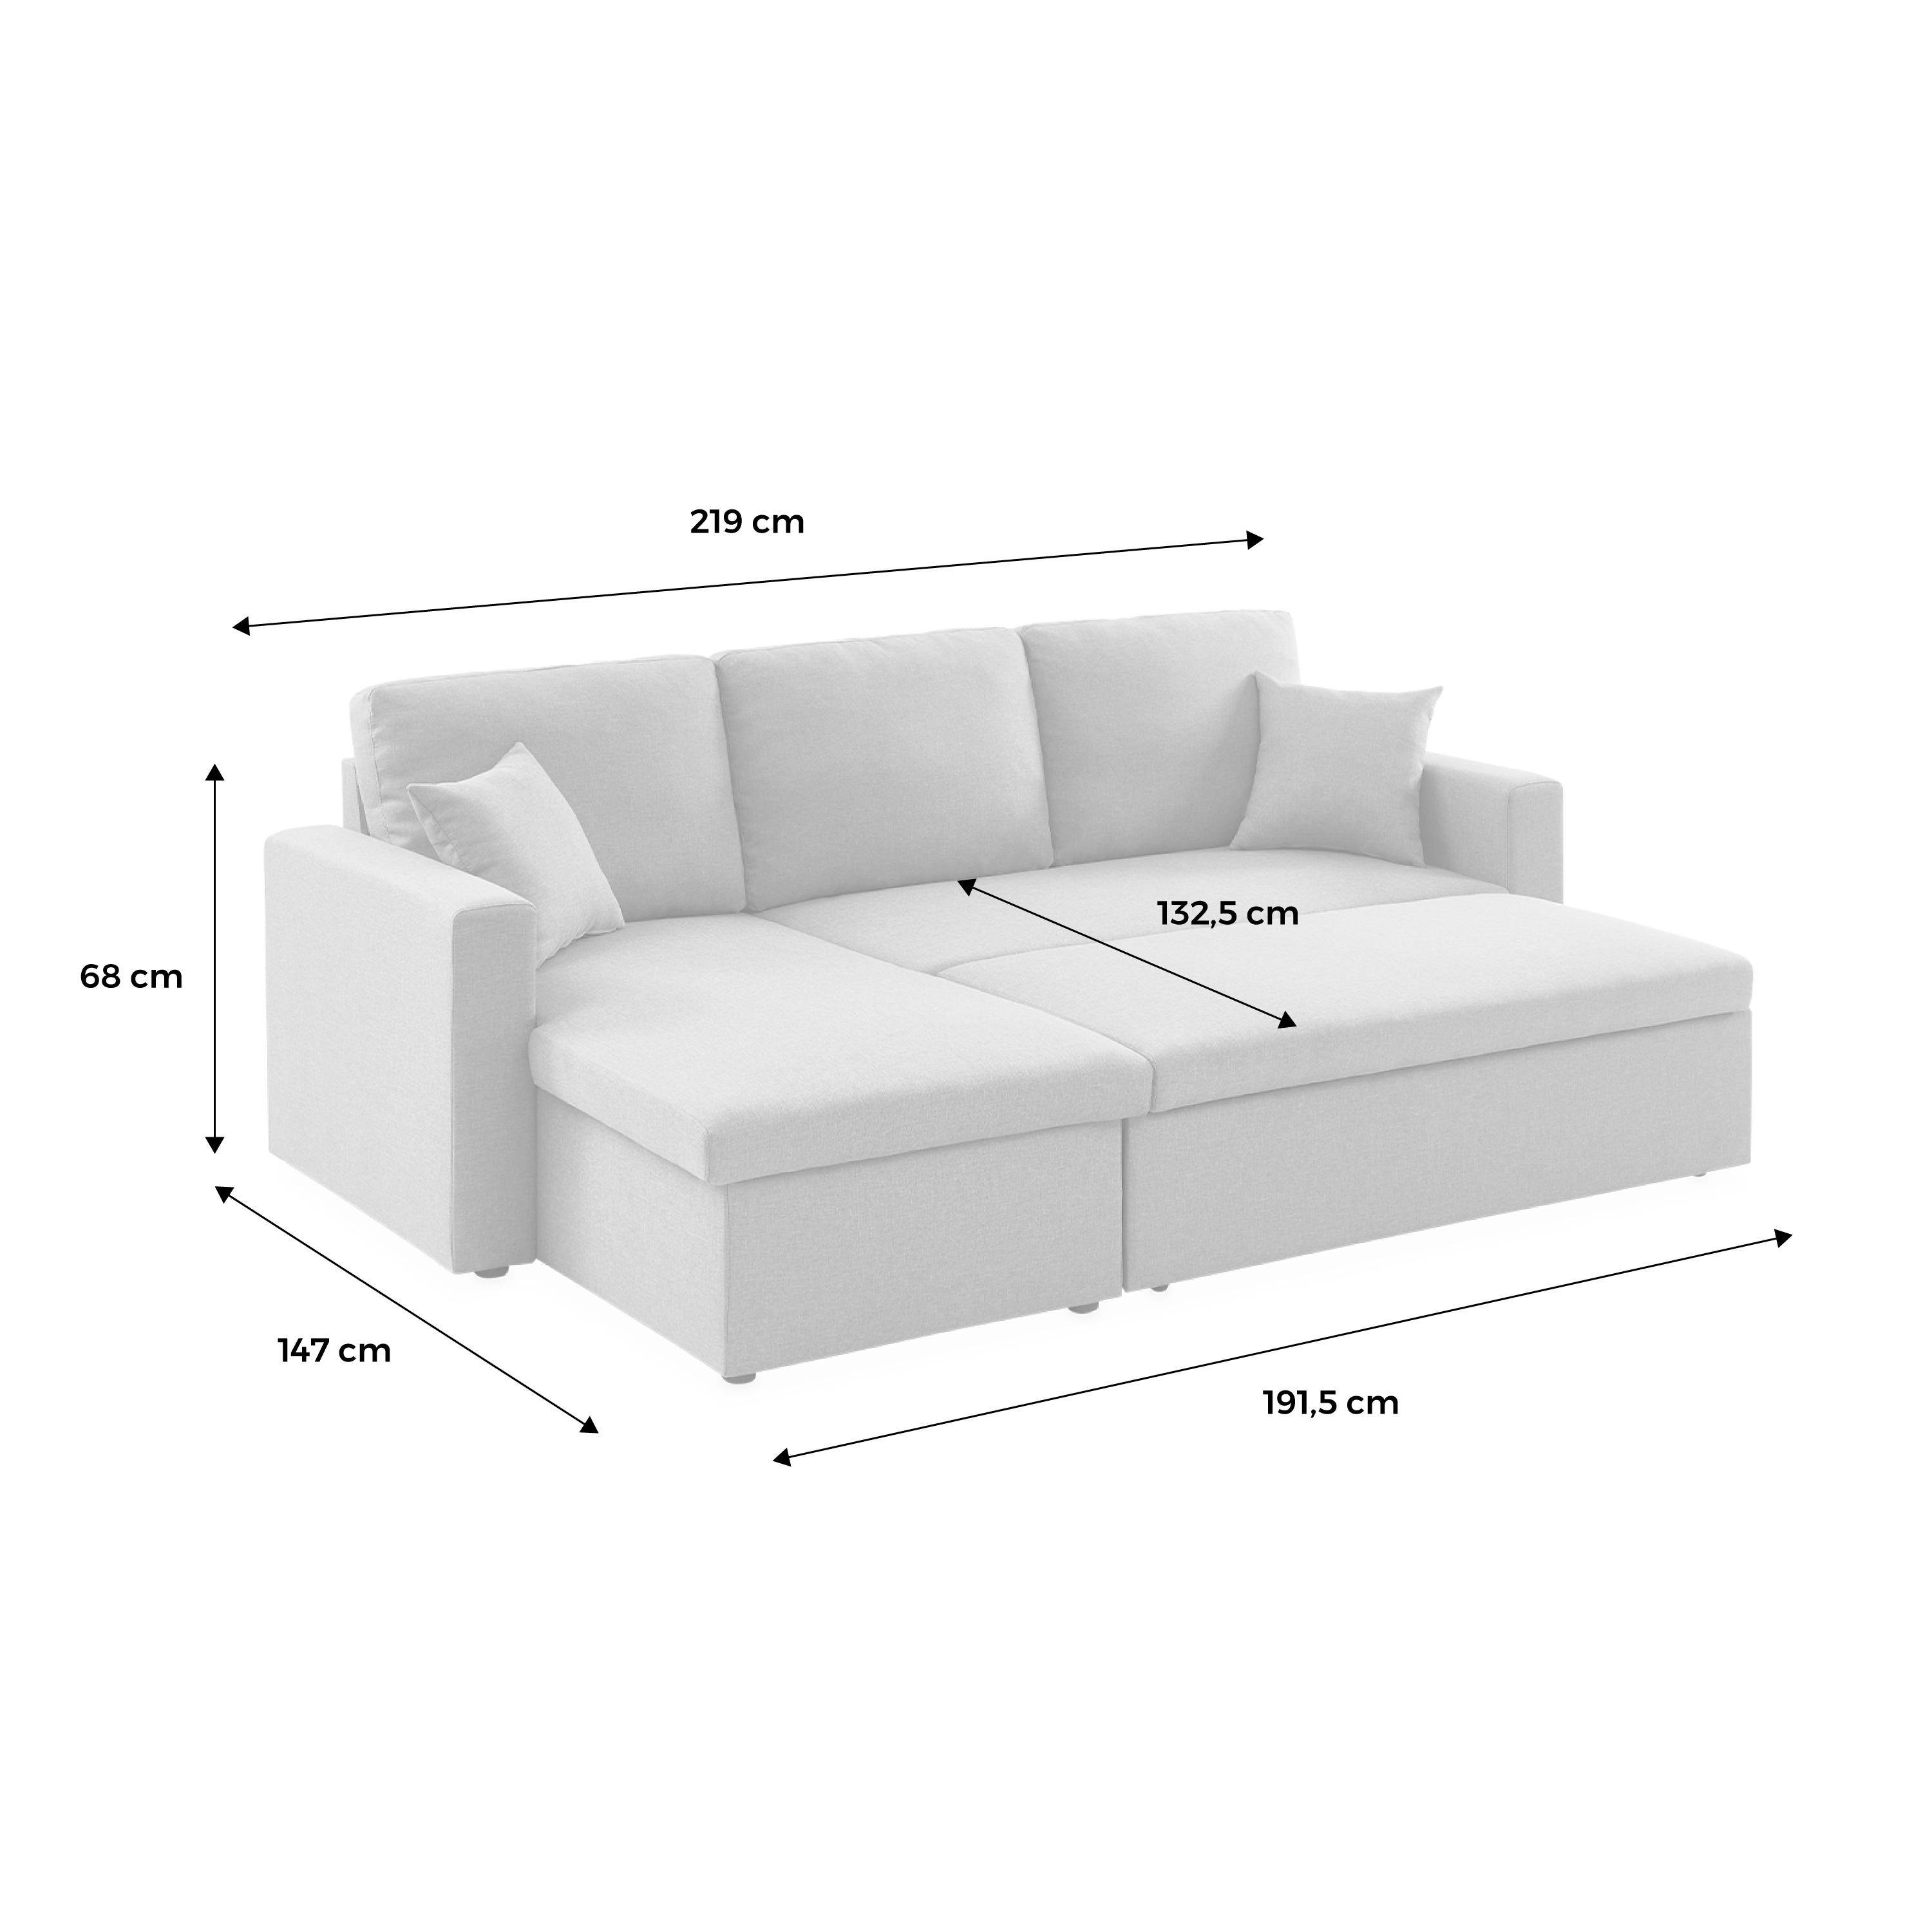 3-seater reversible black corner sofa bed with storage box, black L219xD81xH68cm, IDA,sweeek,Photo10